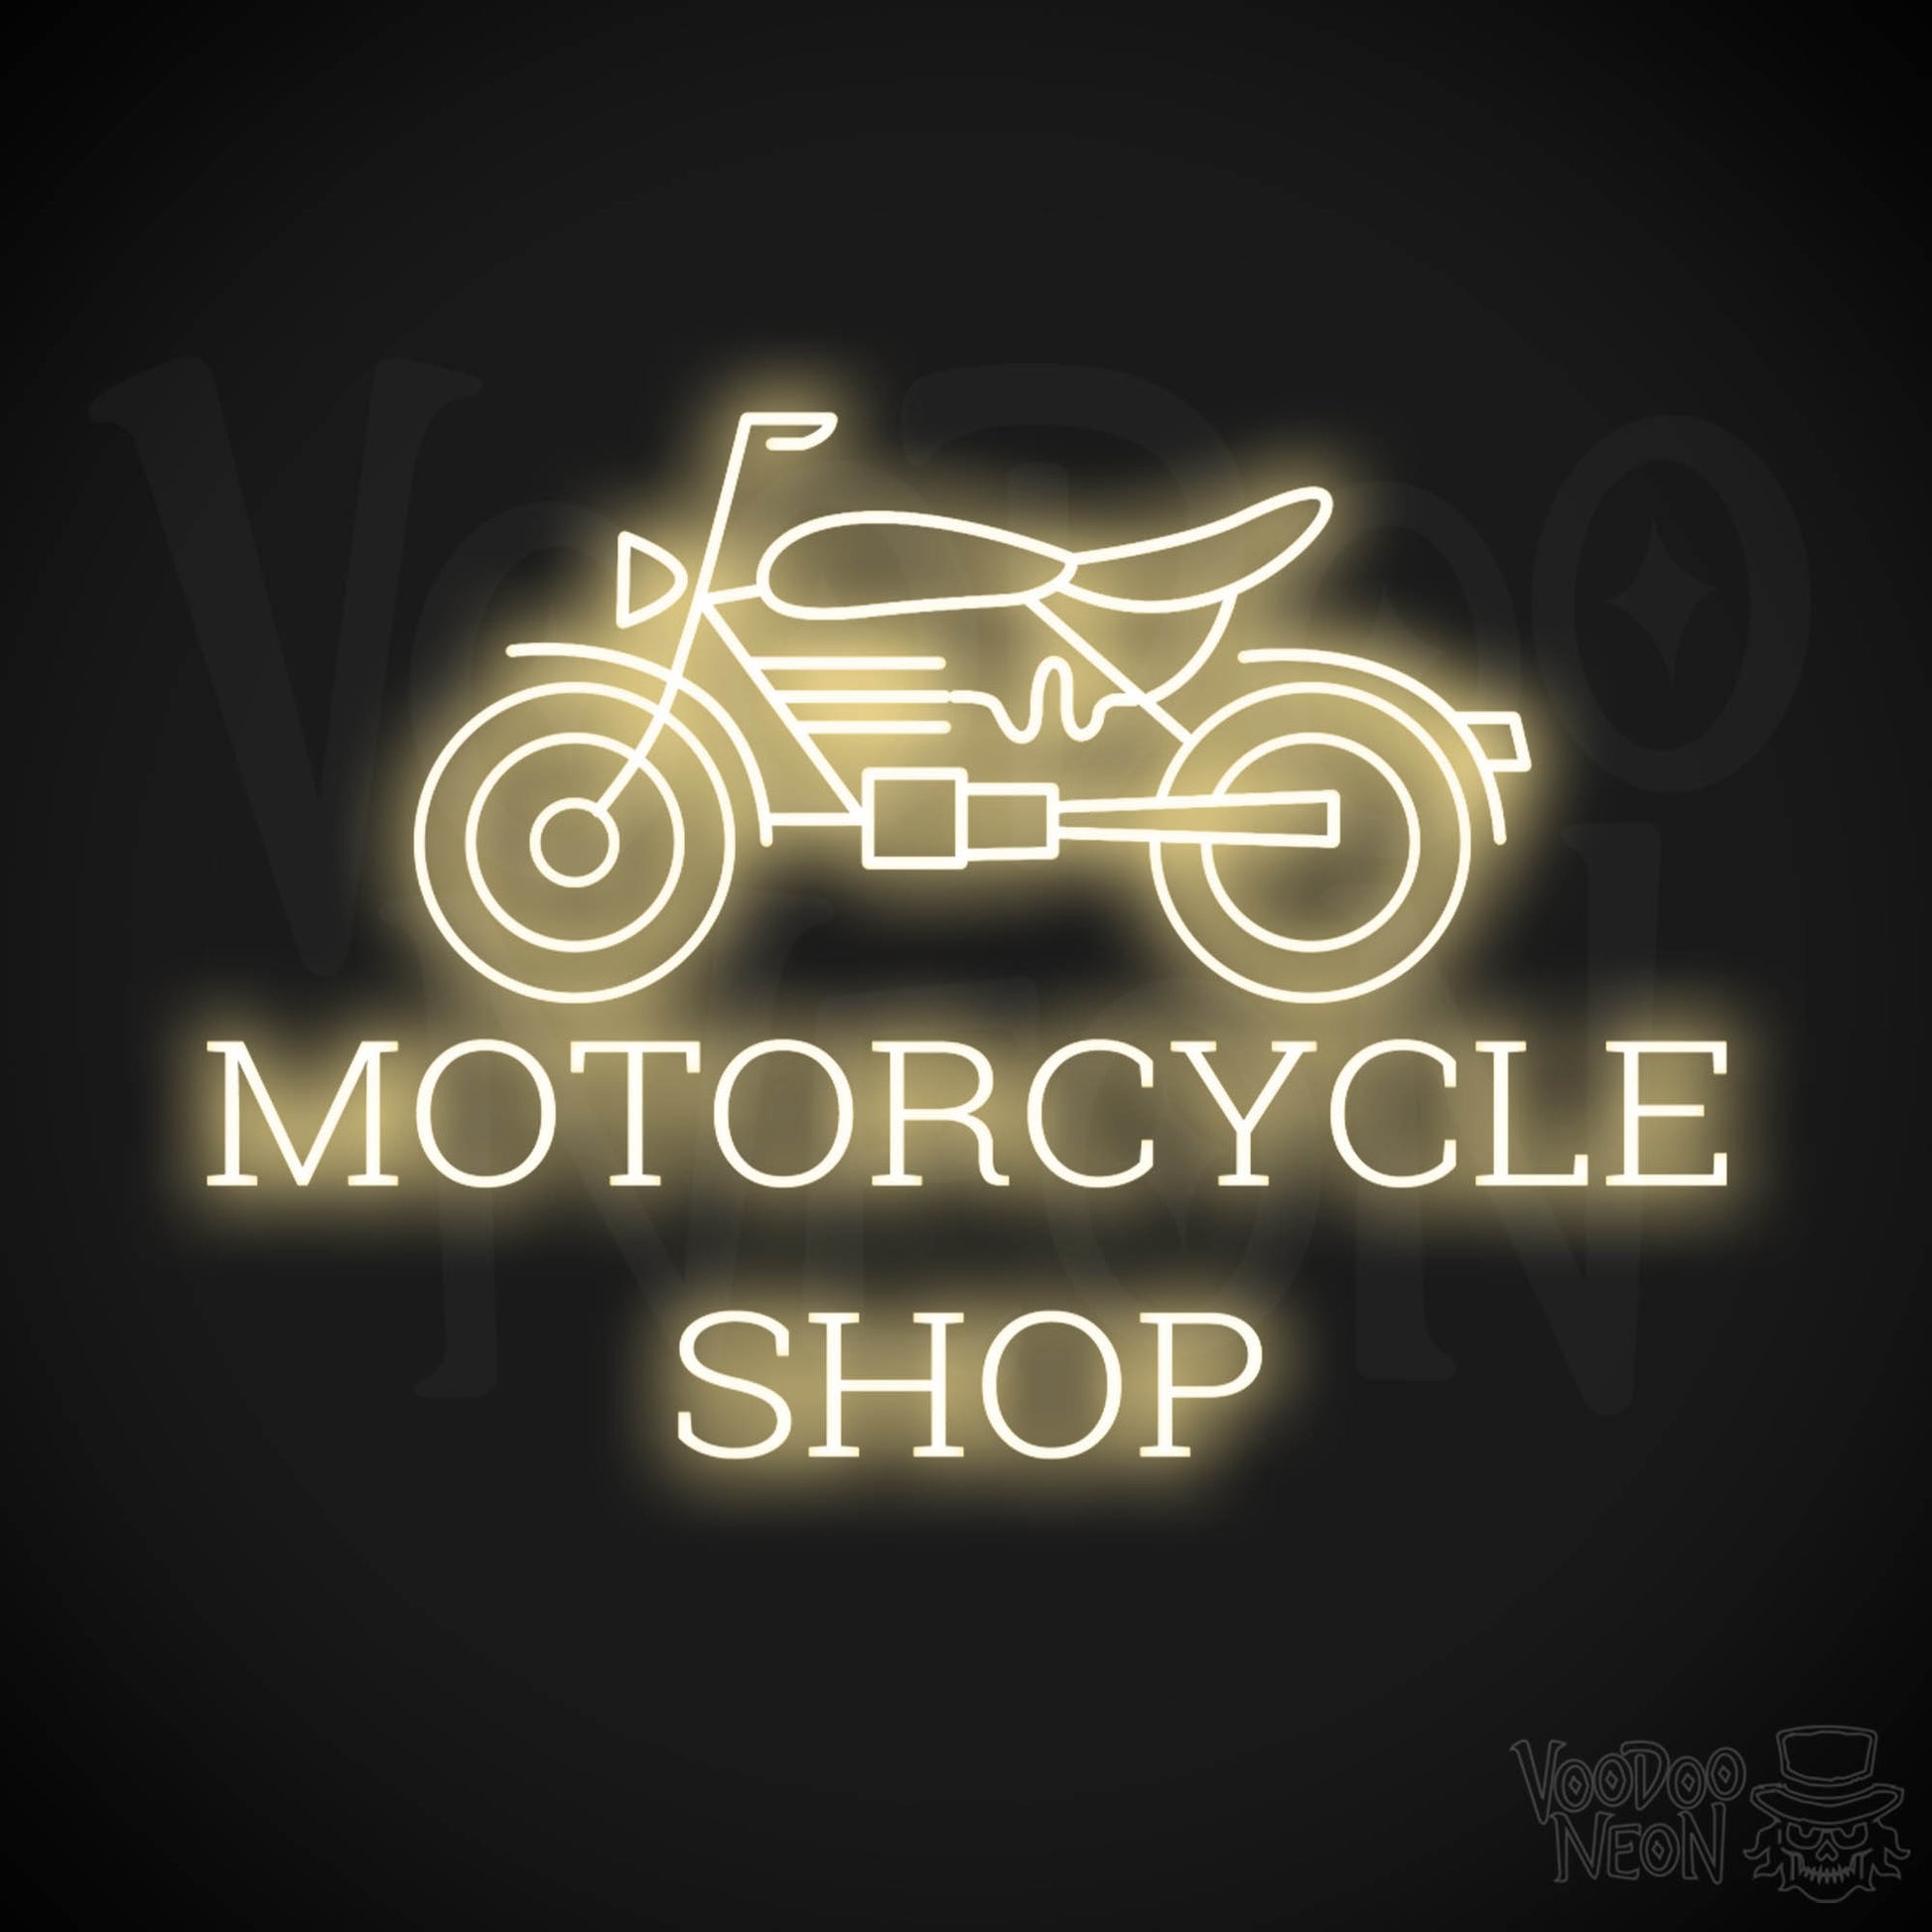 Motorcycle Shop LED Neon - Warm White